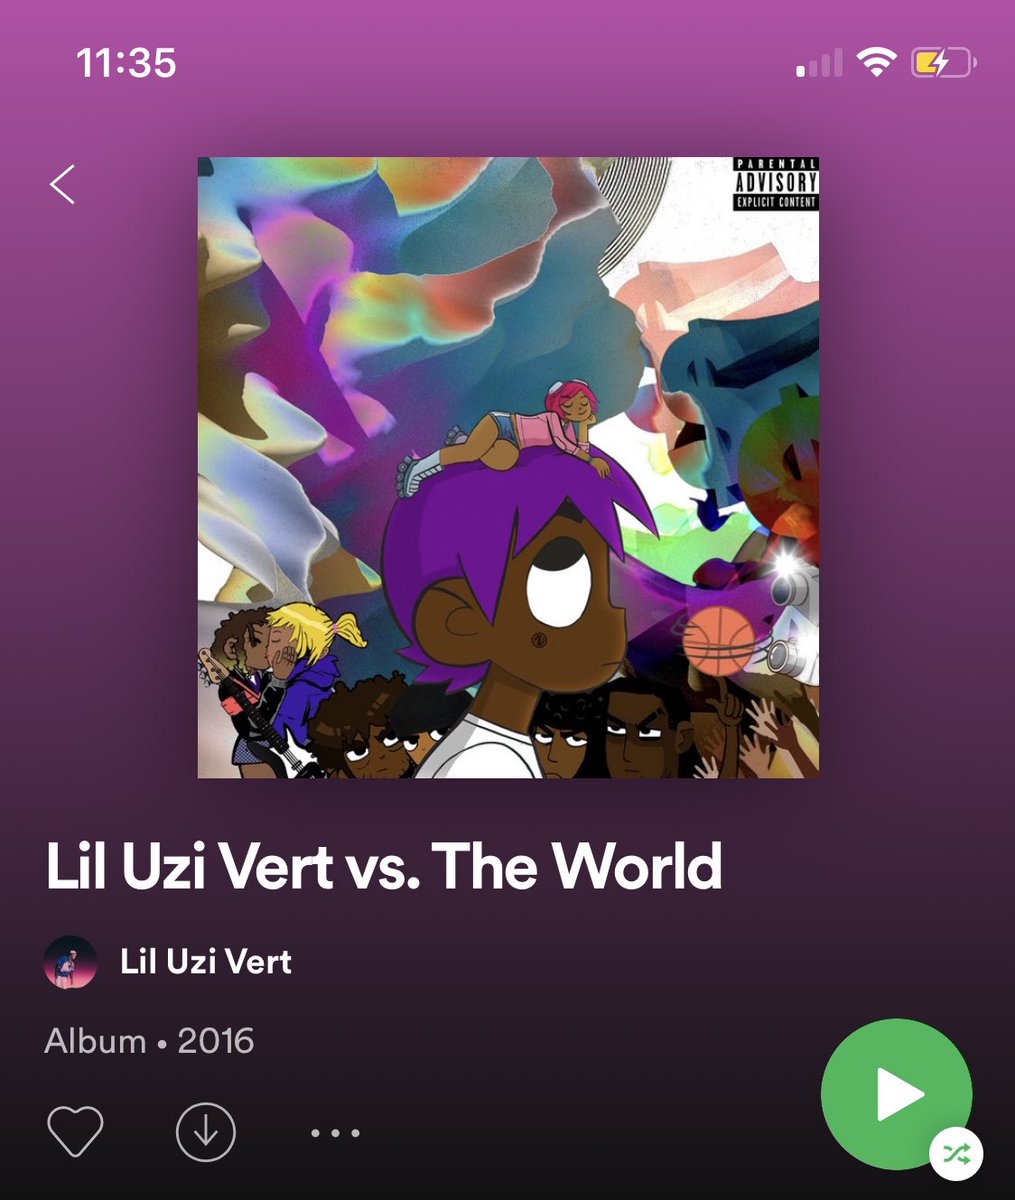 LUV vs the worldfav songs: can’t decidemy favorite uzi album